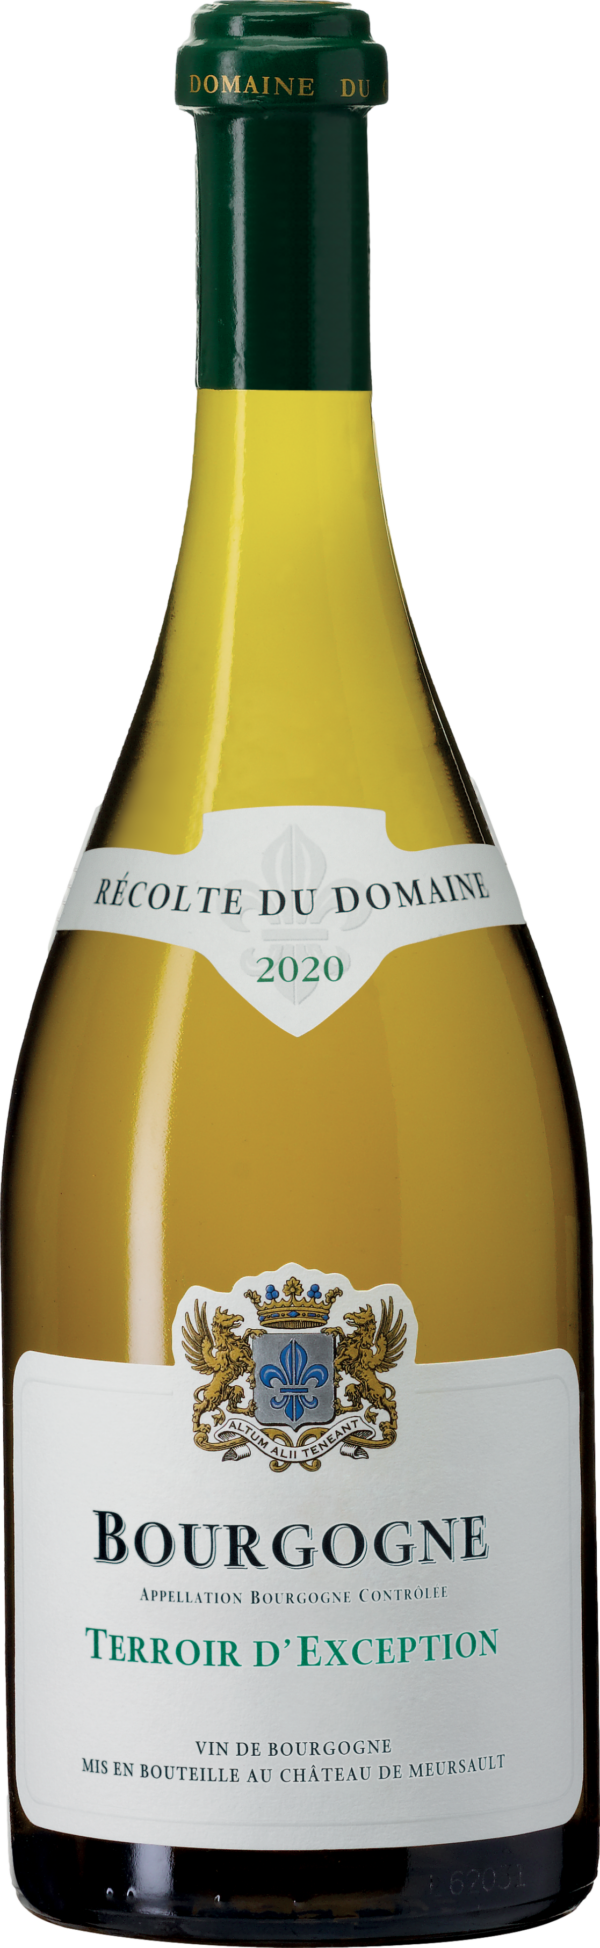 Product image of Chateau de Meursault Bourgogne Terroir d'Exception Chardonnay 2020 from 8wines